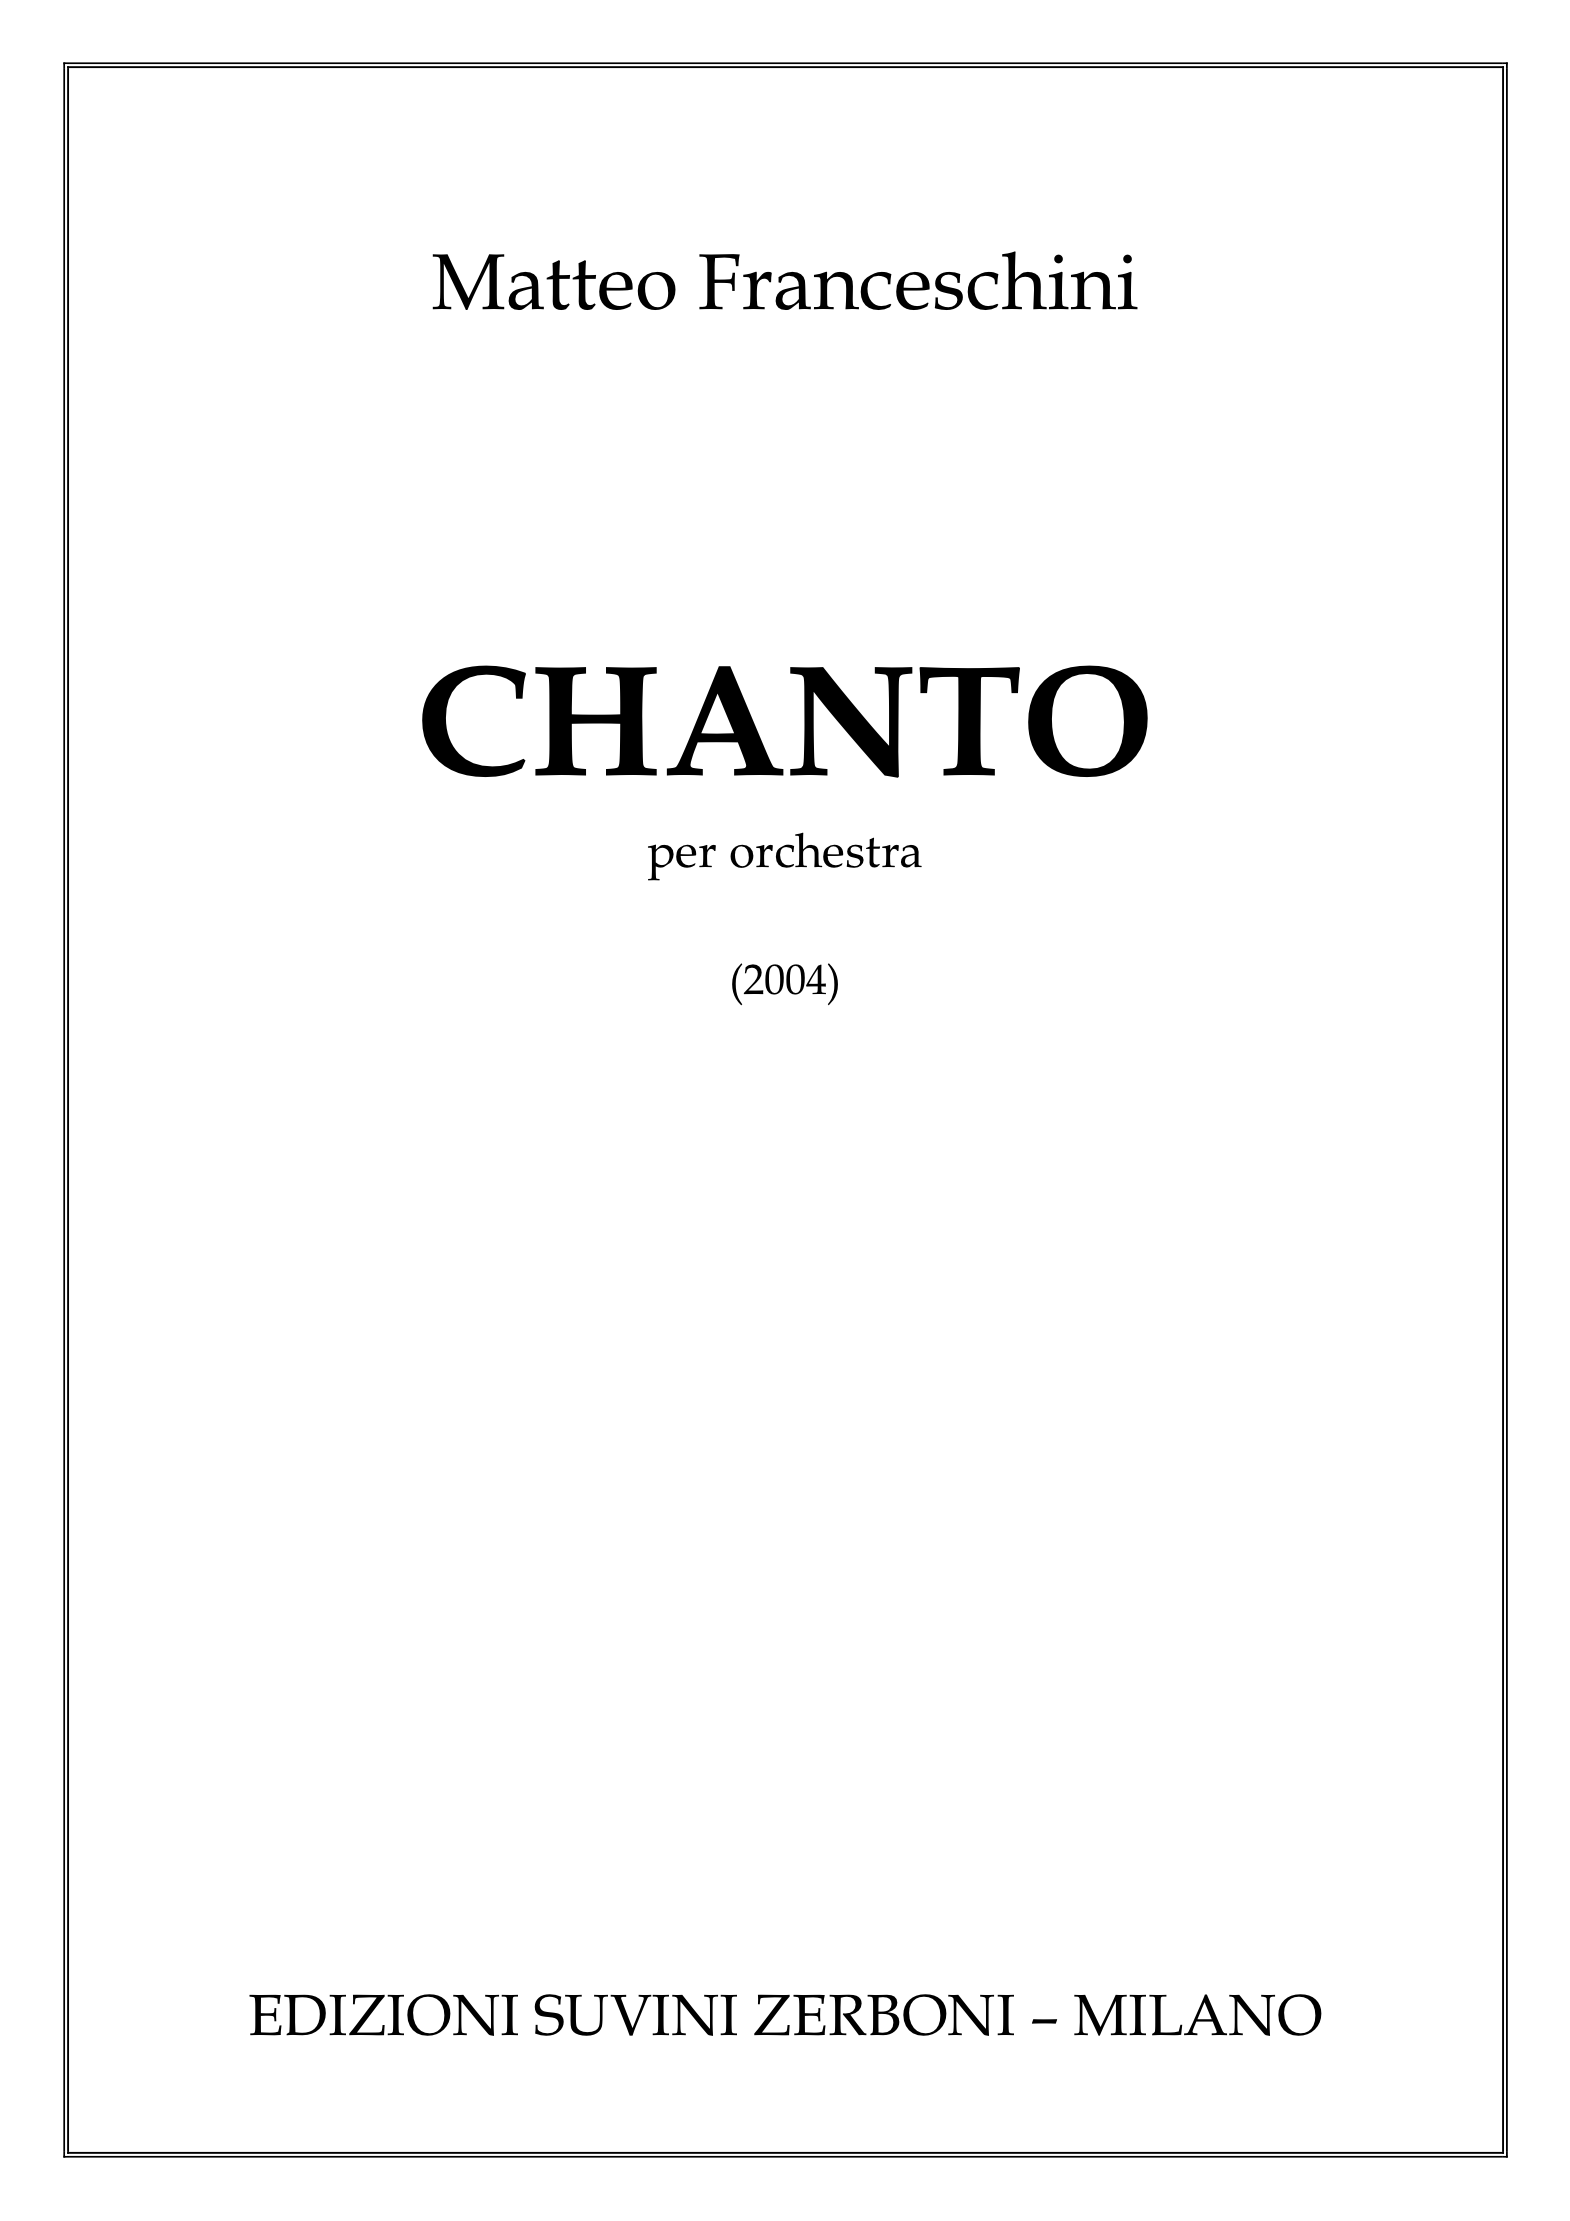 CHANTO_Franceschini 1